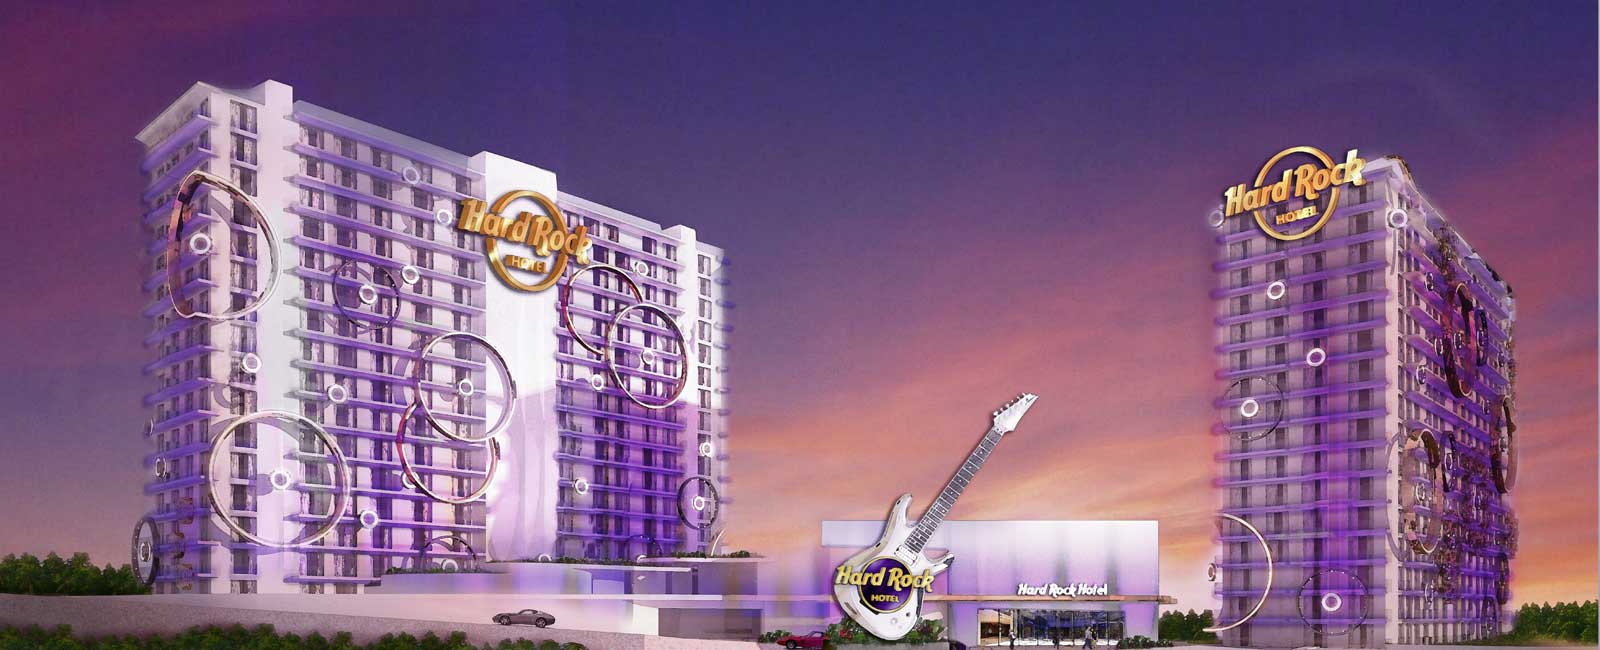 Hard Rock Hotel Tenerife 2016 rendering